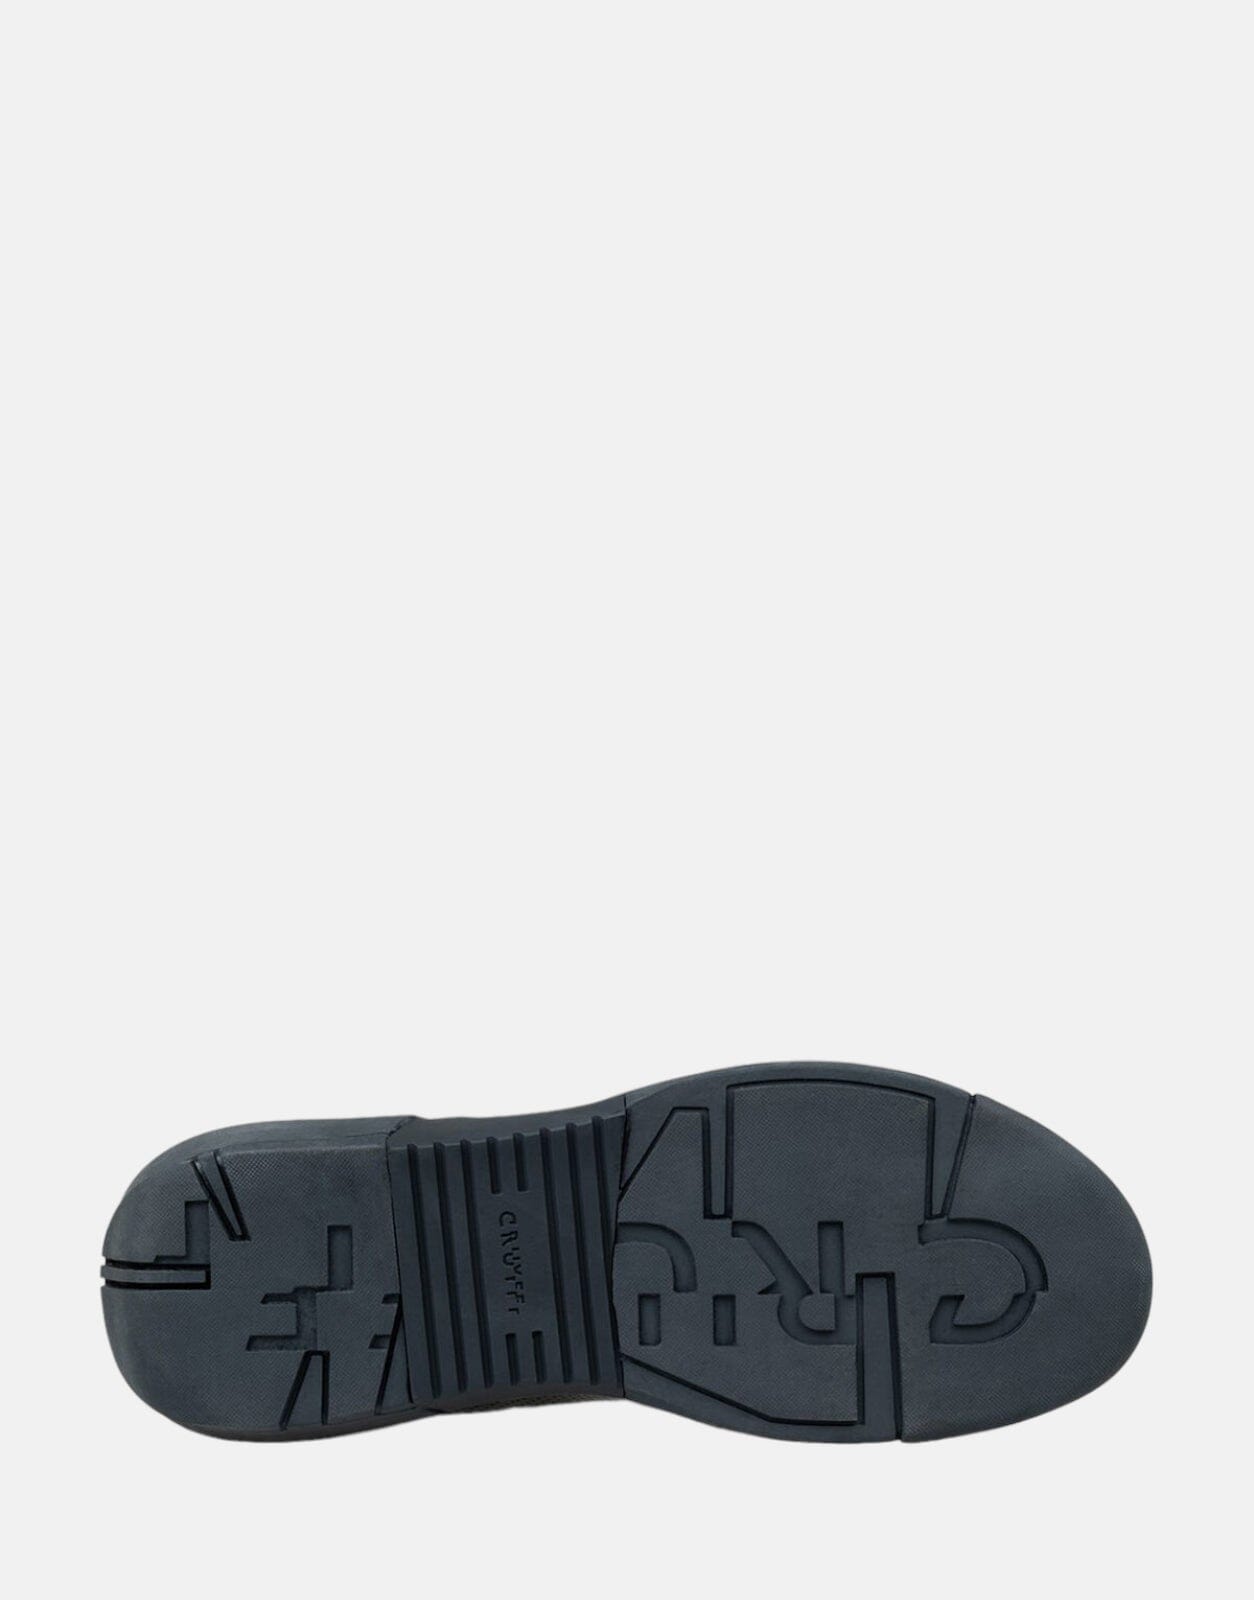 Cruyff Shatter Black/Gold Sneakers - Subwear